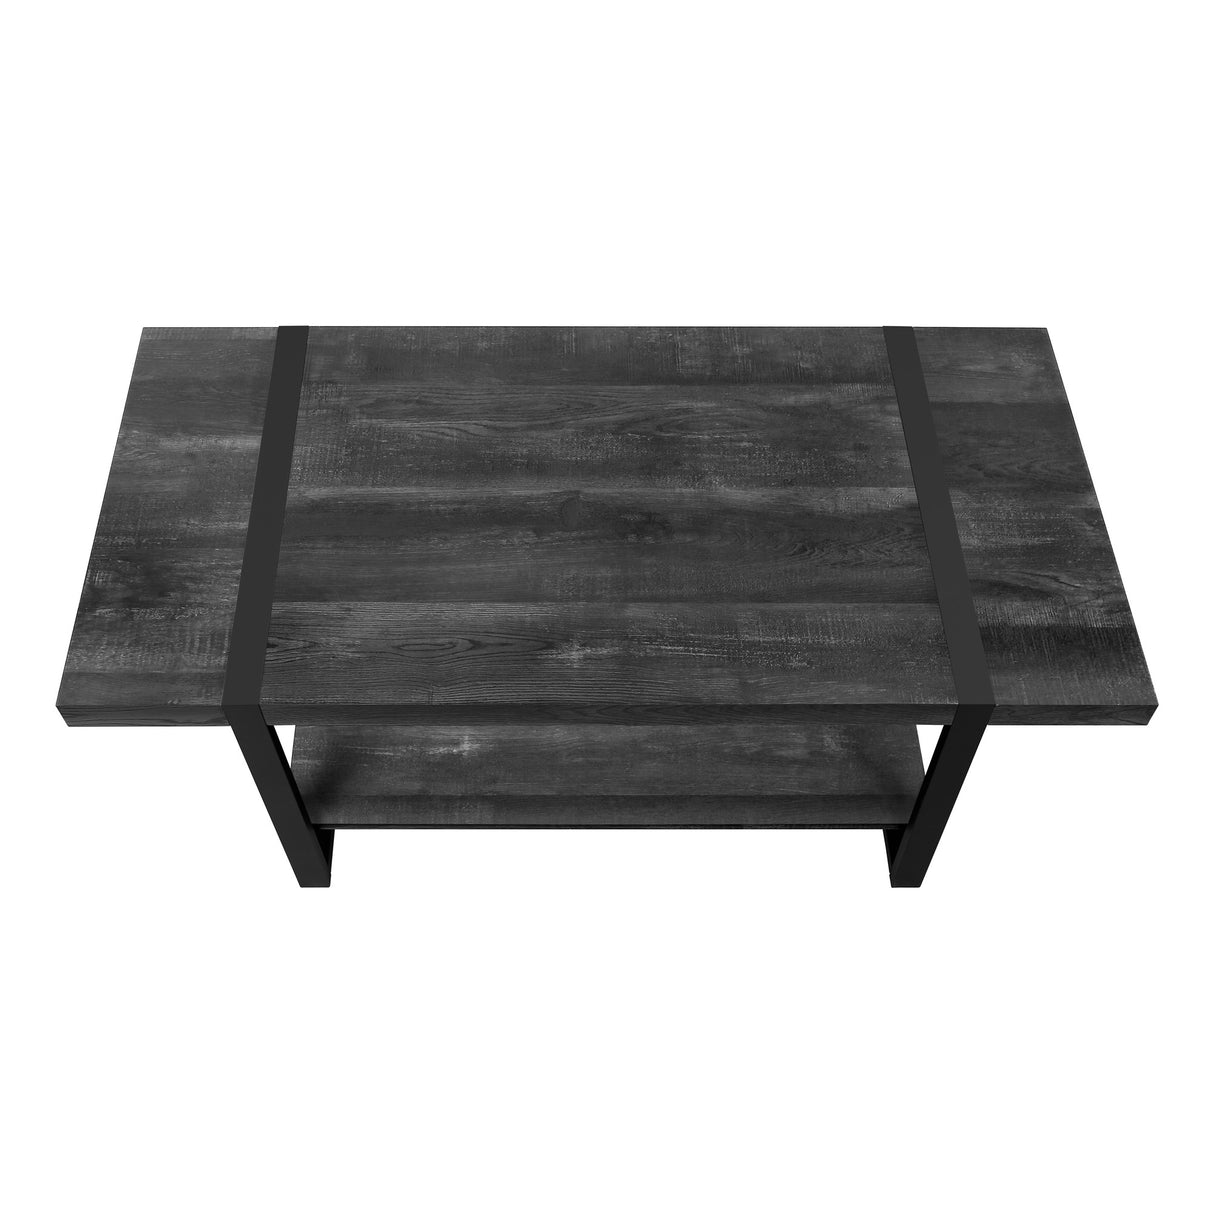 47" Black Rectangular Coffee Table With Shelf